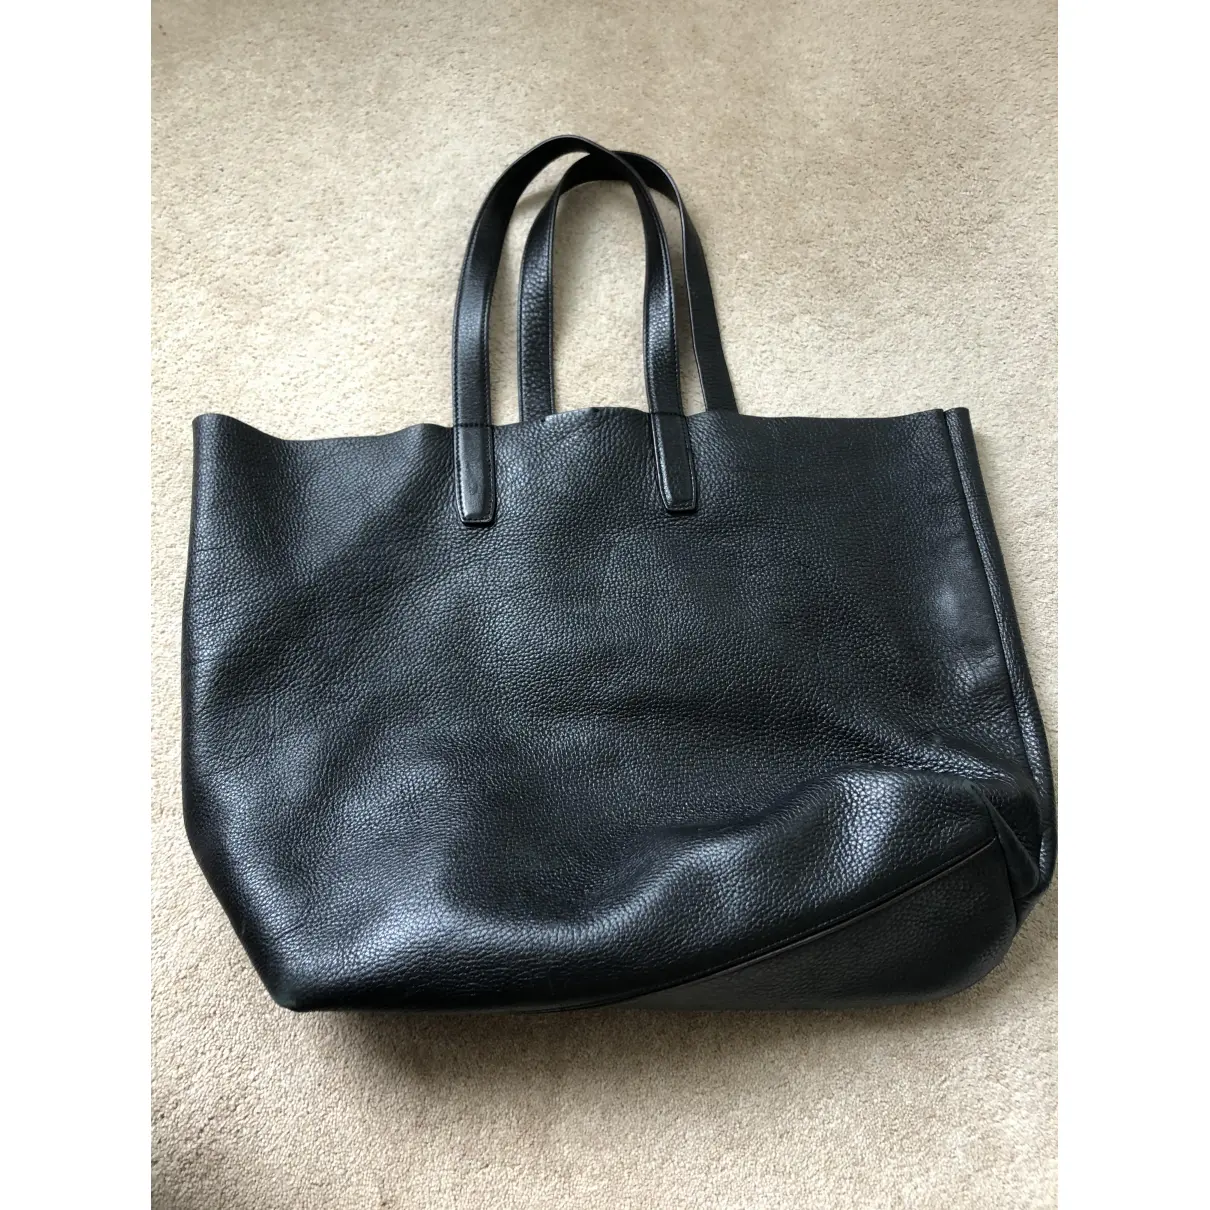 Buy Nicole Farhi Leather handbag online